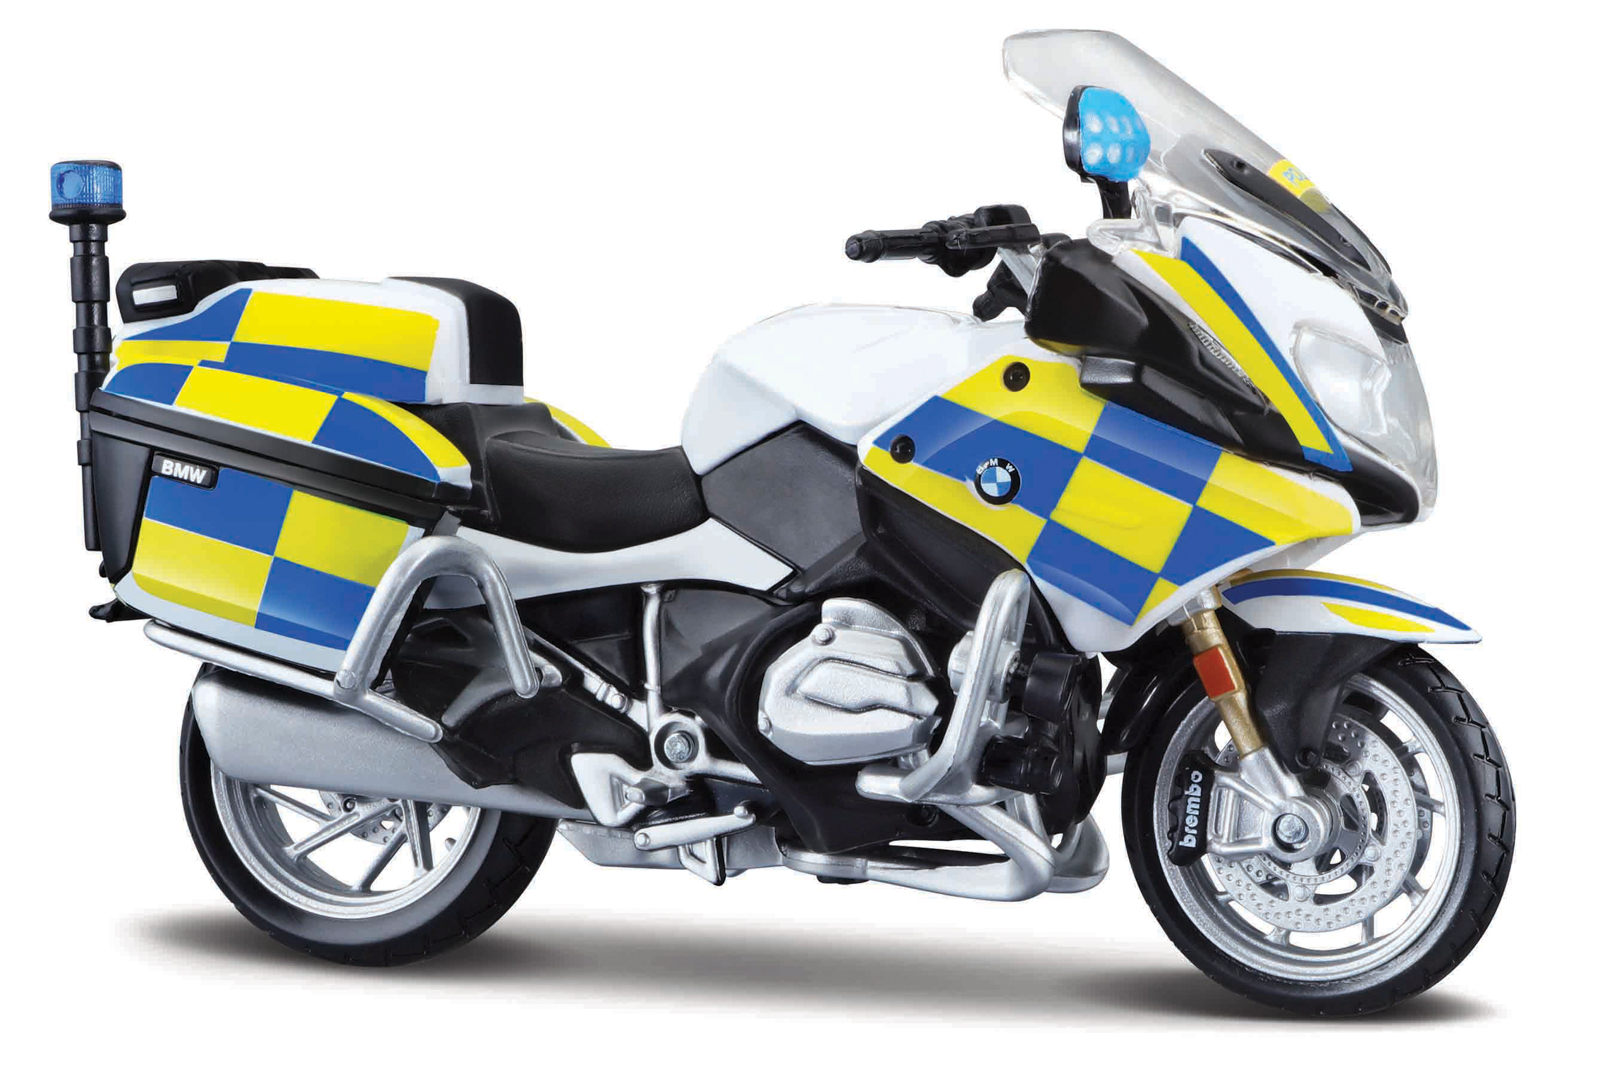 Maisto - Policejní motocykl - BMW R 1200 RT (UK), 1:18